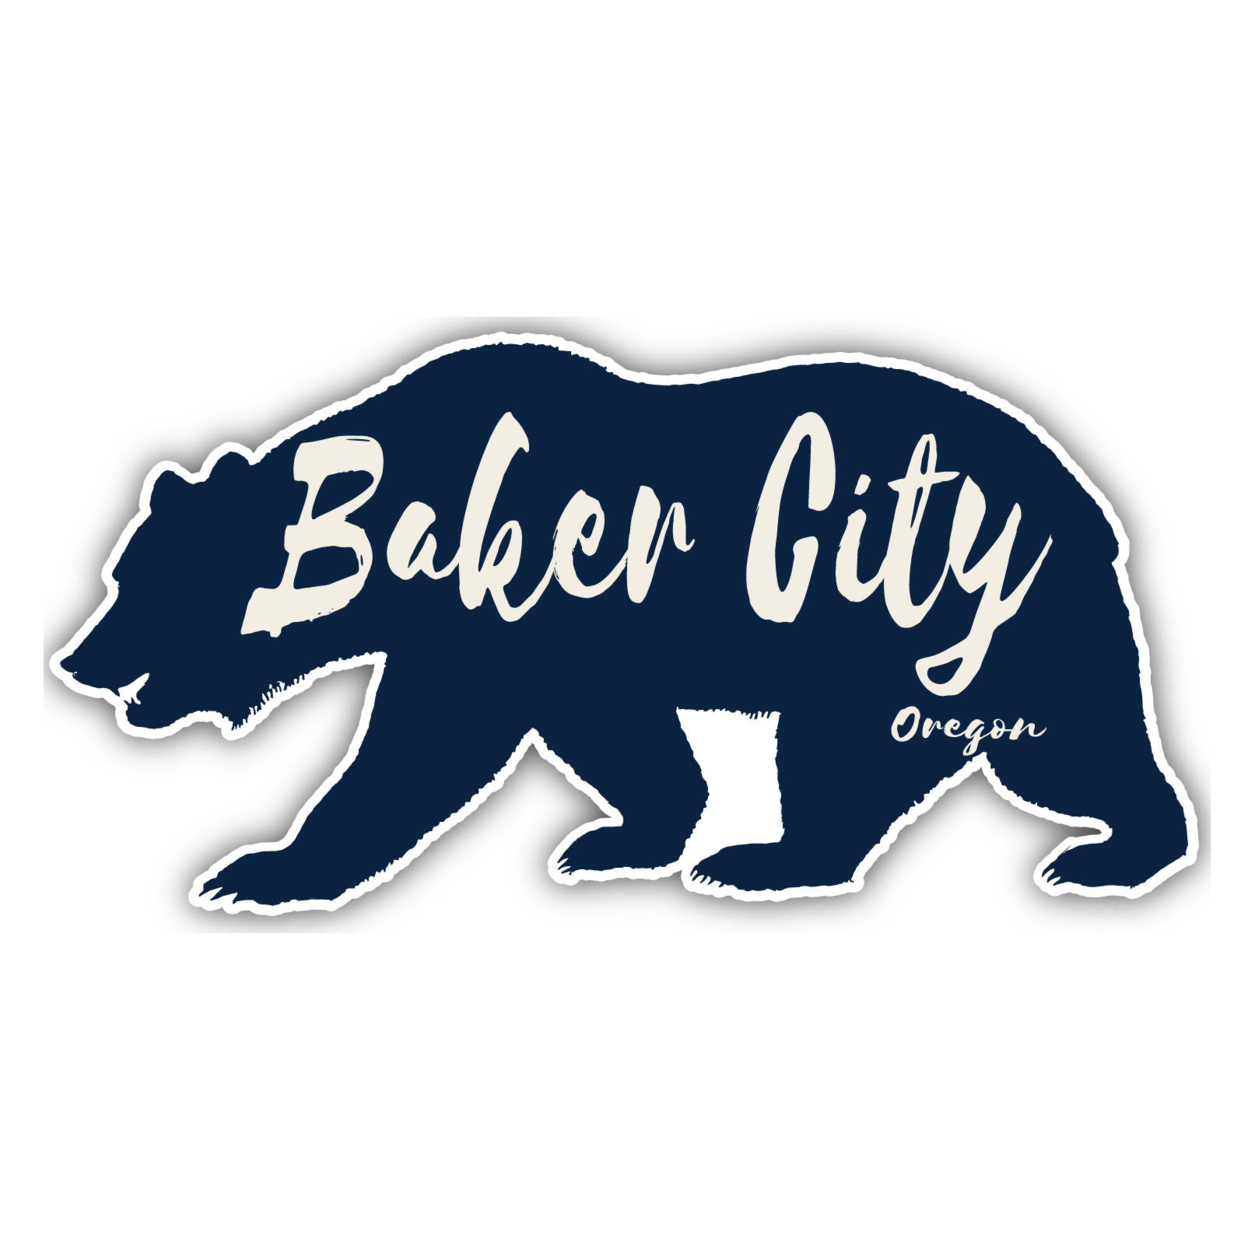 Baker City Oregon Souvenir Decorative Stickers (Choose Theme And Size) - 4-Pack, 4-Inch, Bear